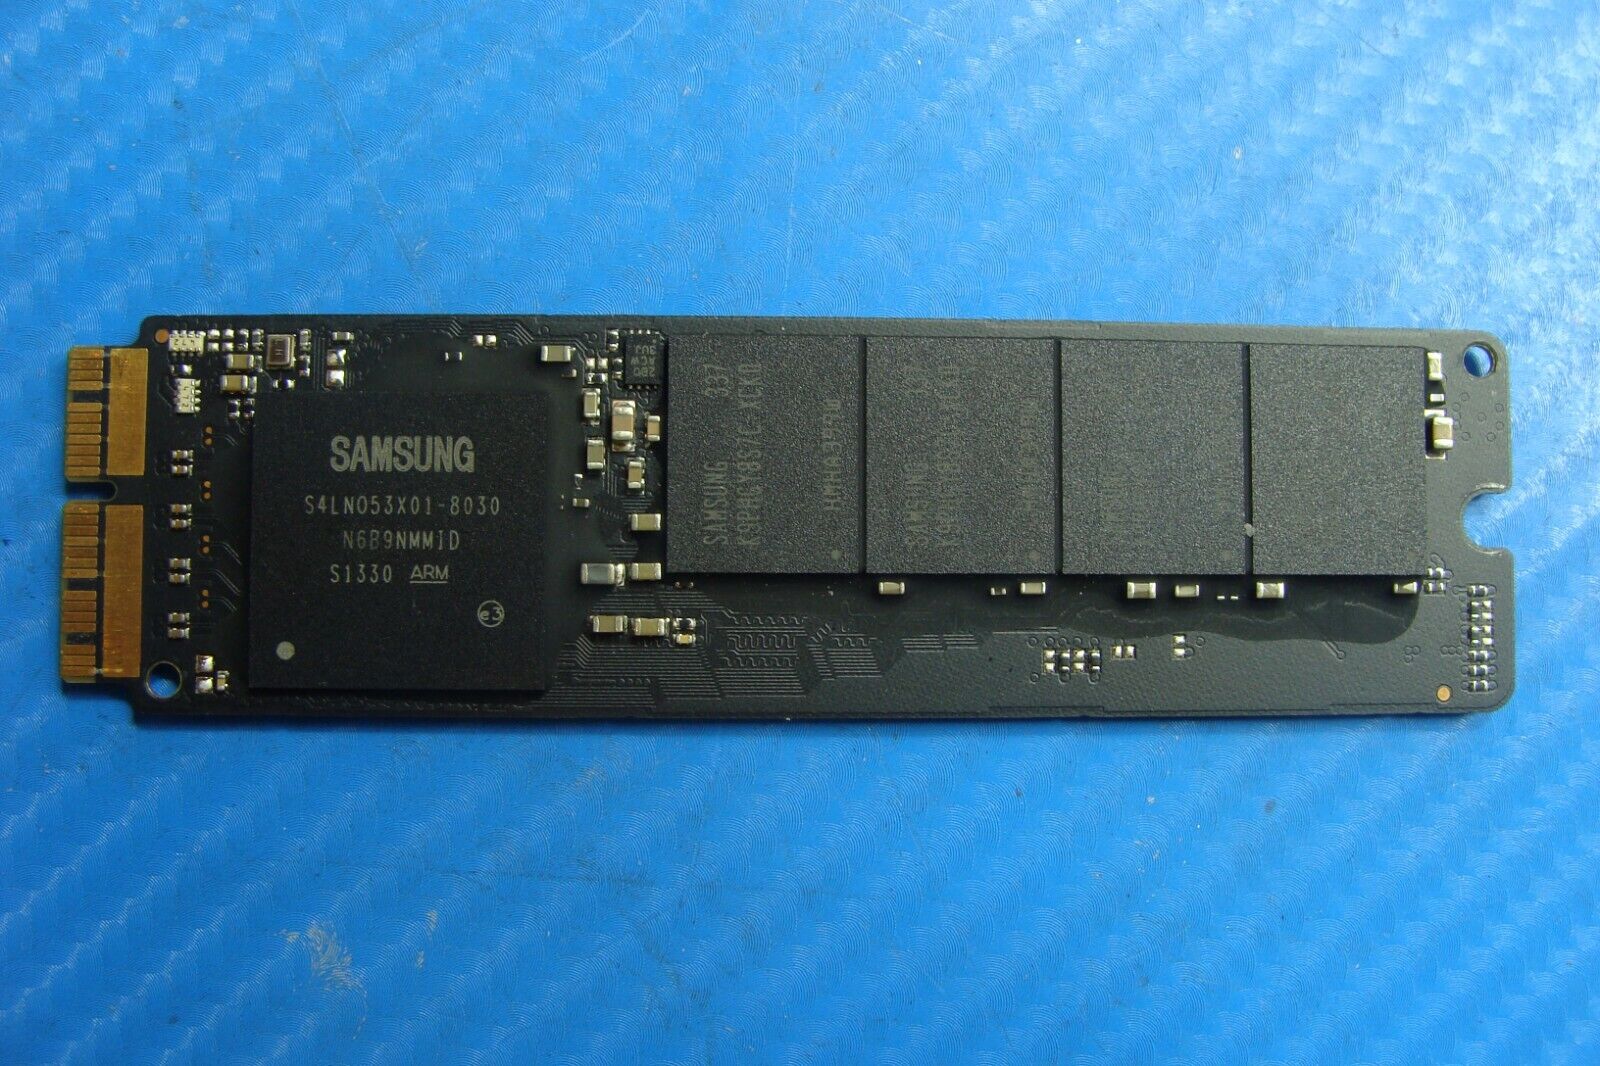 MacBook Pro A1398 Samsung 512GB Solid State Drive MZ-JPU512t/0A6 655-1805D